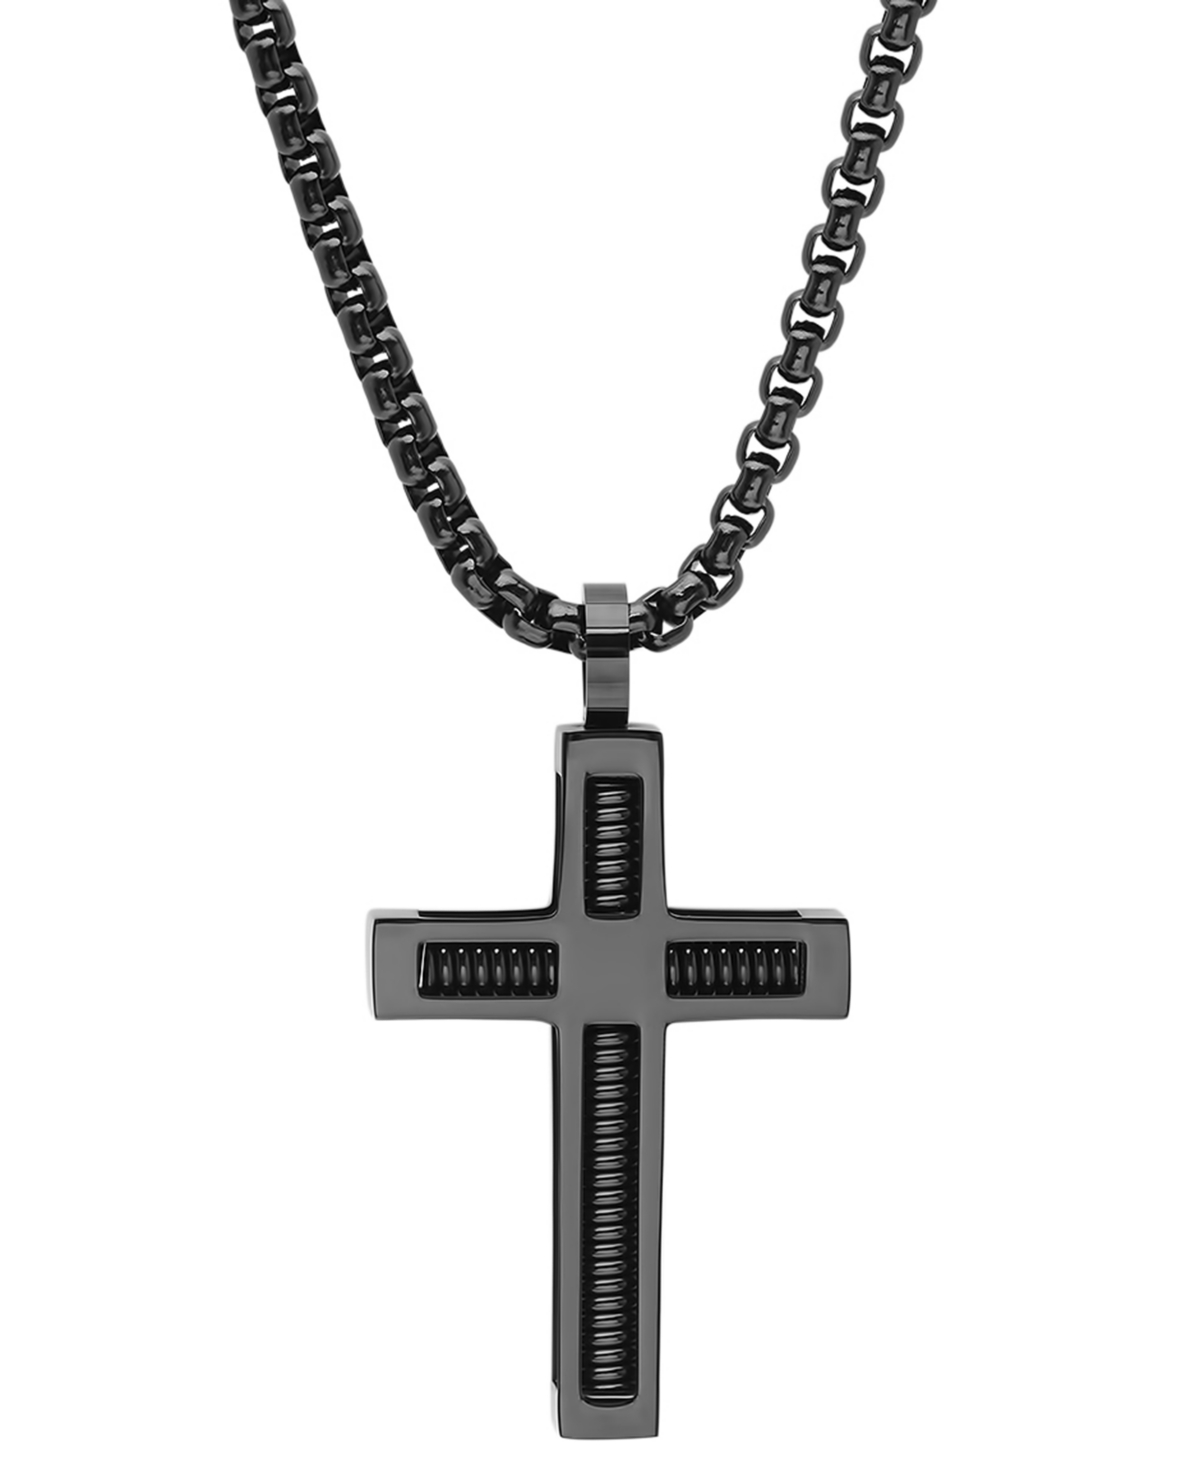 Steeltime Men's Black Ip Stainless Steel Spring Inlay Cross 24" Pendant Necklace